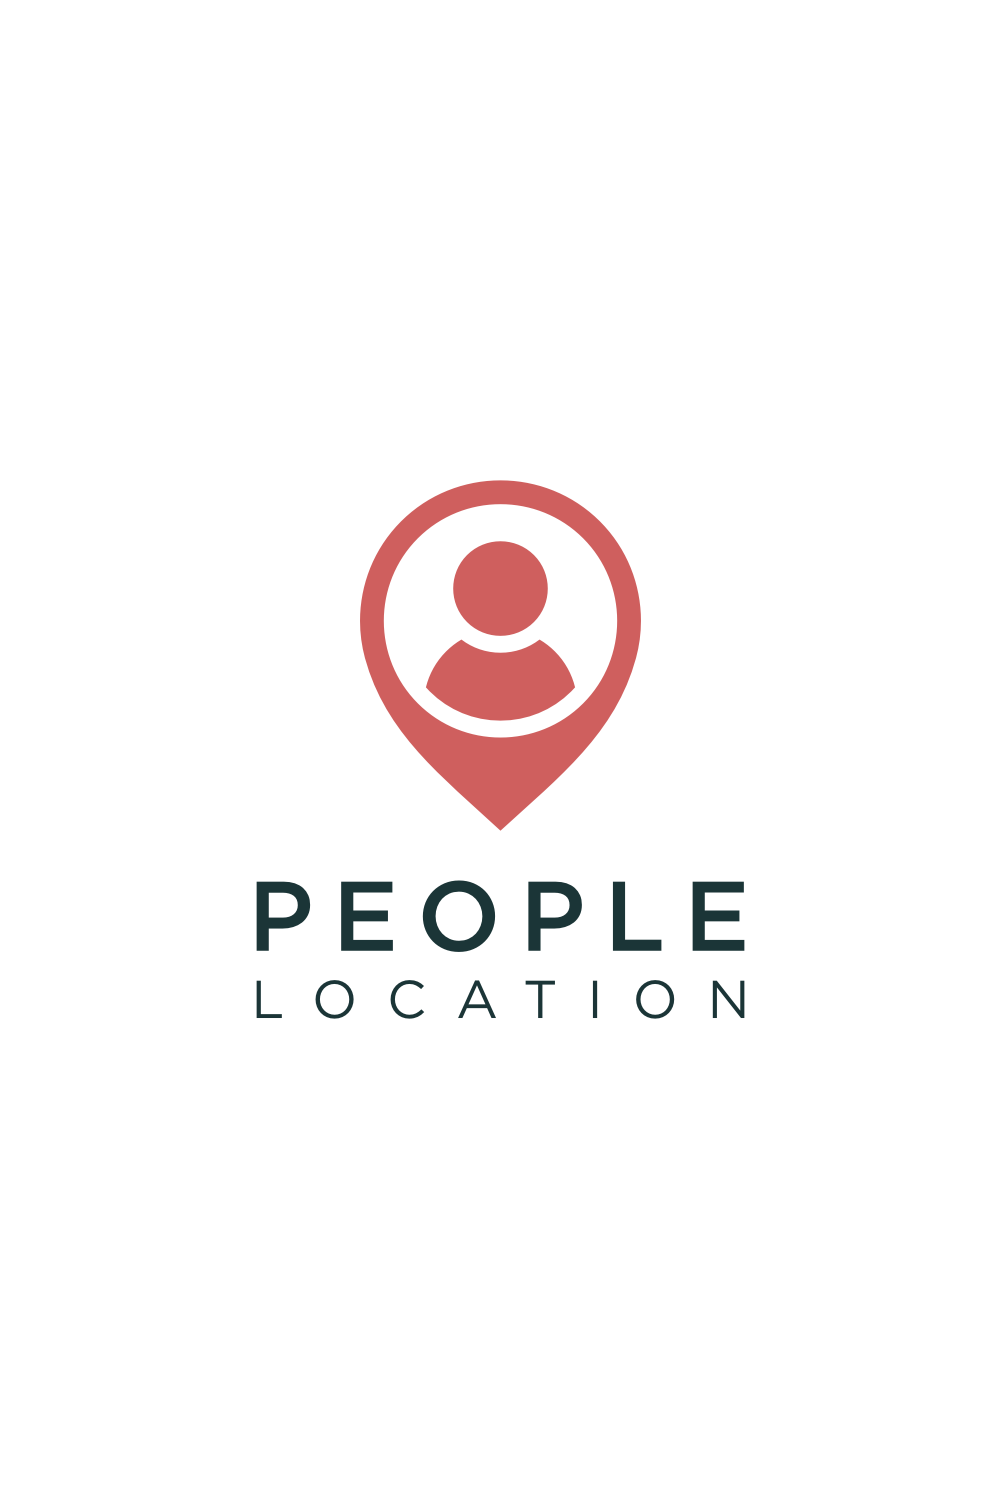 People Location Logo Design Vector pinterest image.